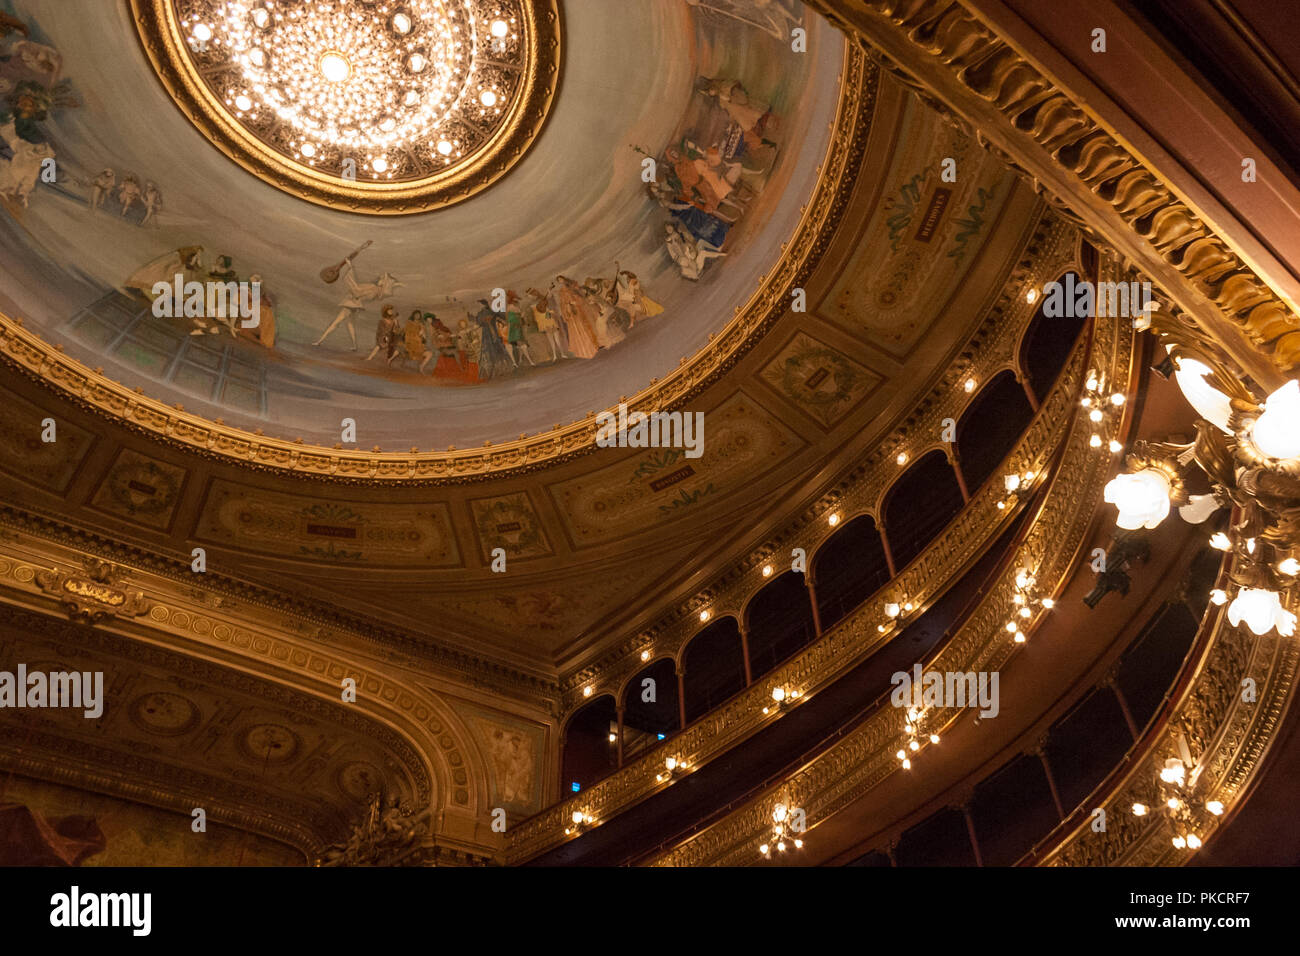 Buenos Aires, Argentinien. 01. Januar 2014. Ein Blick in das Innere des berühmten Colon Theater (Teatro Colon). Credit: Sara Armas/Alamy Stockfoto